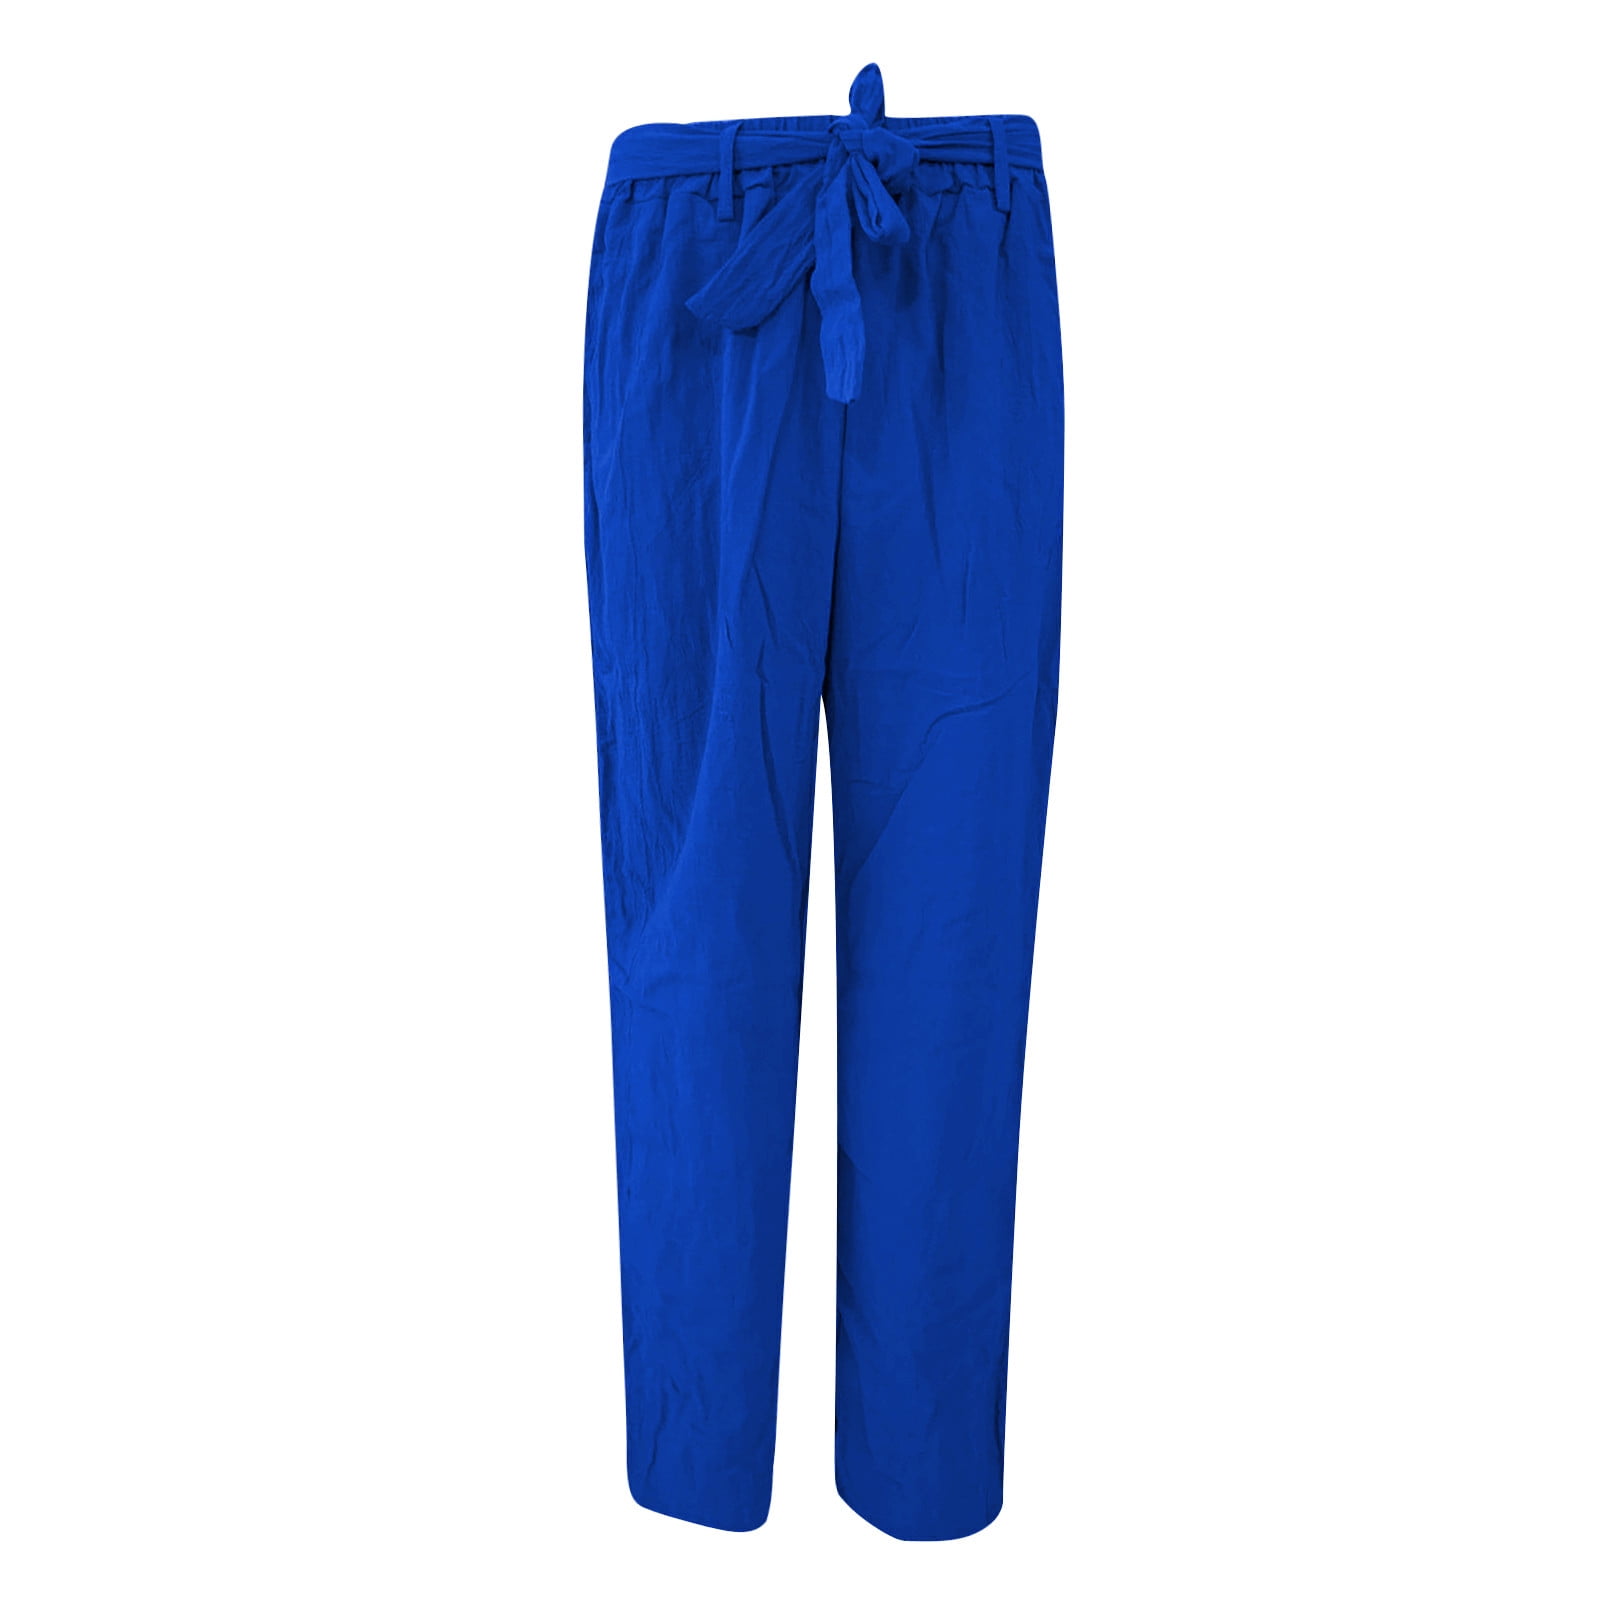 Buy Girls Linen Trouser Pants, Blue Online at 56% OFF